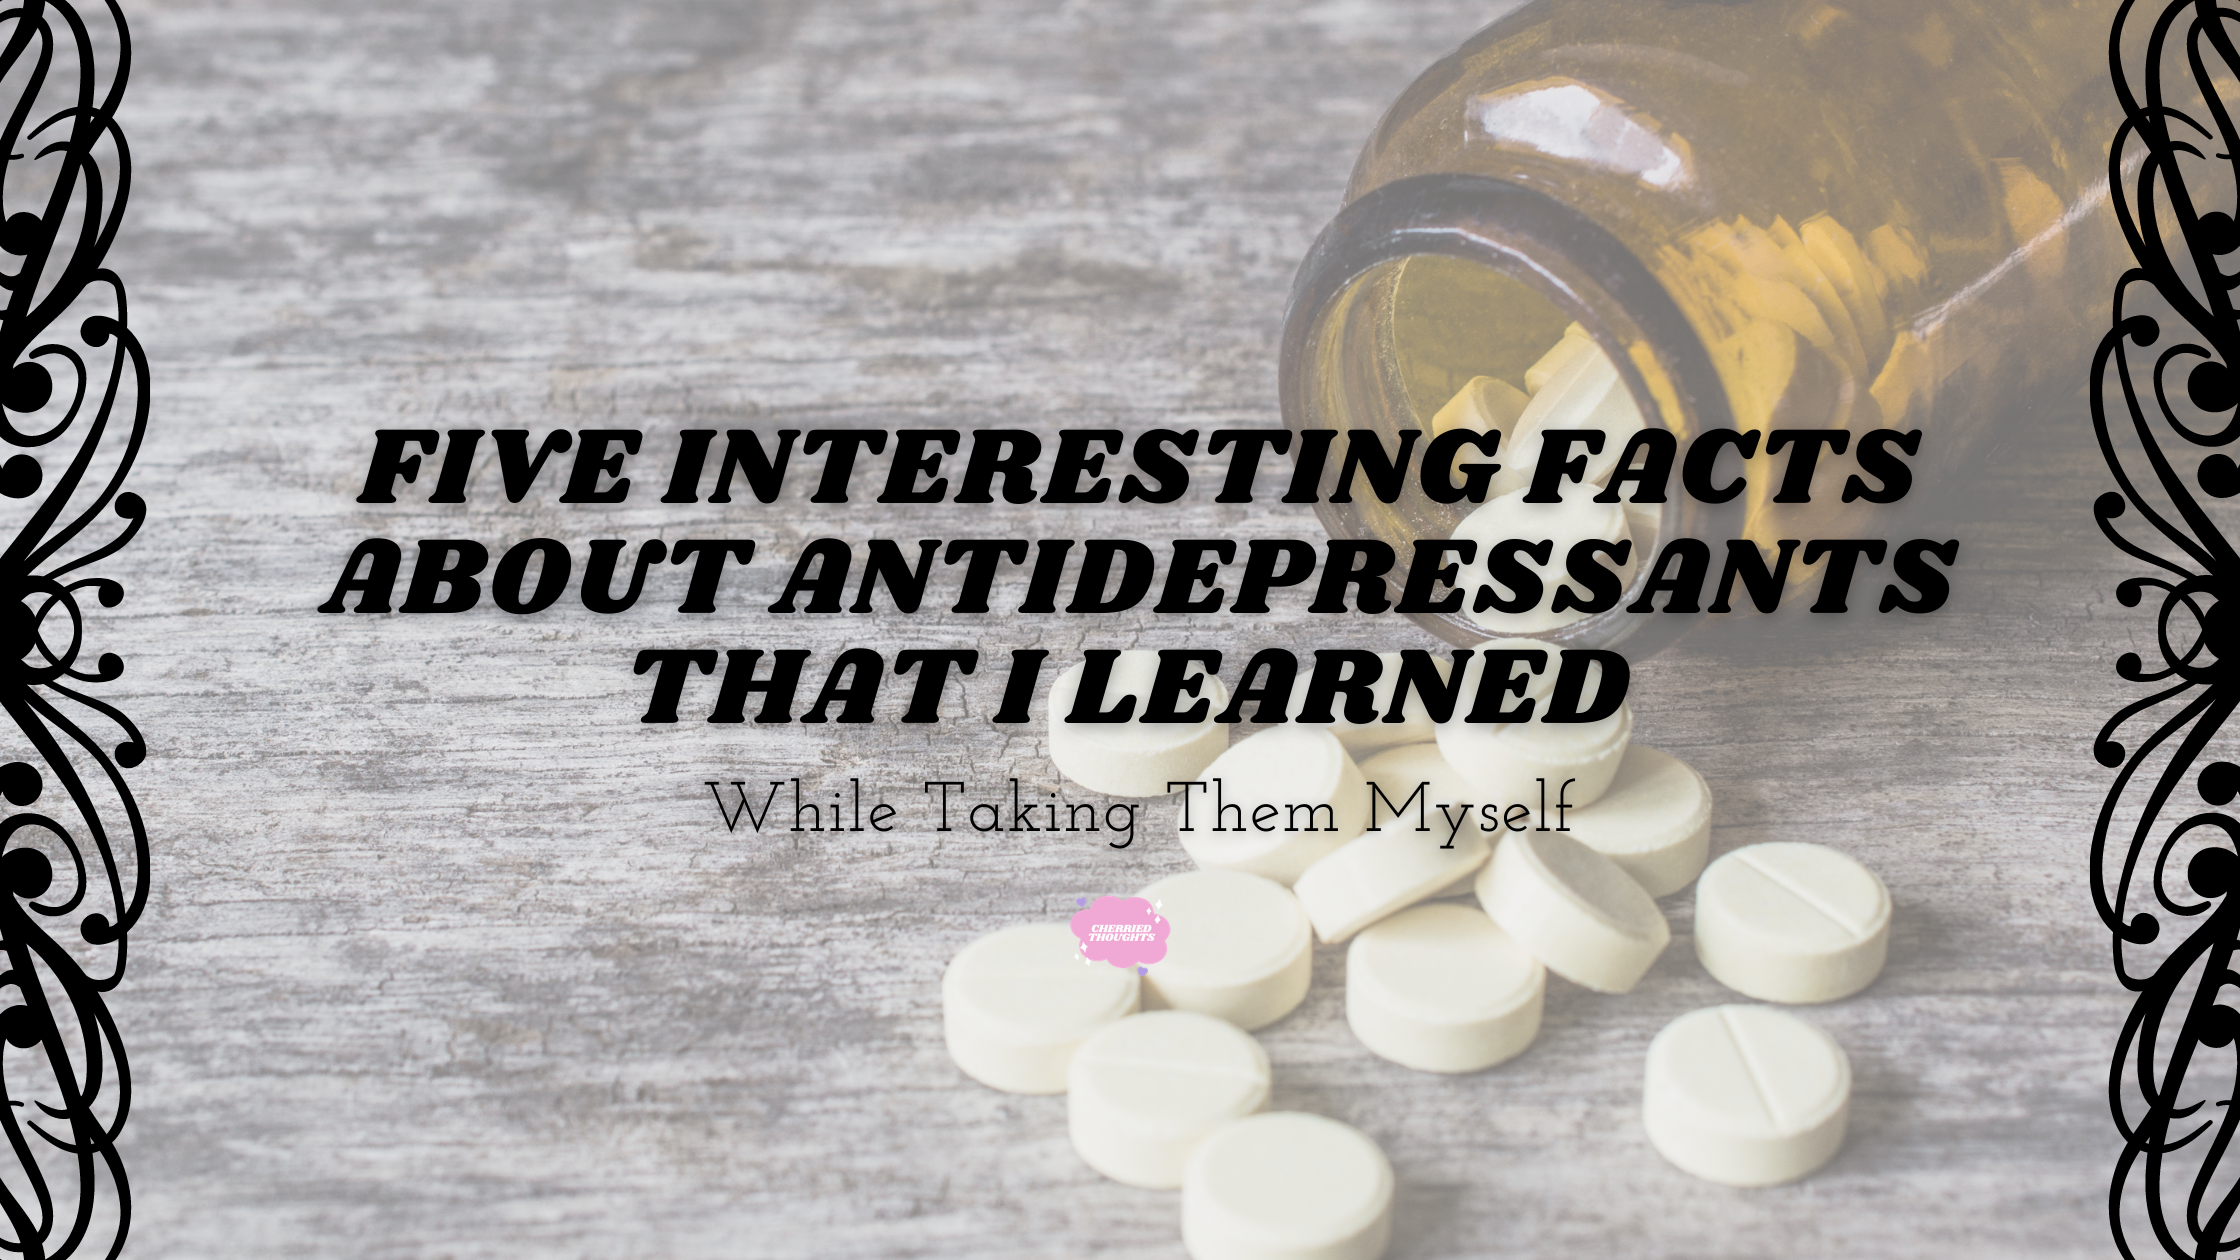 antidepressants facts header